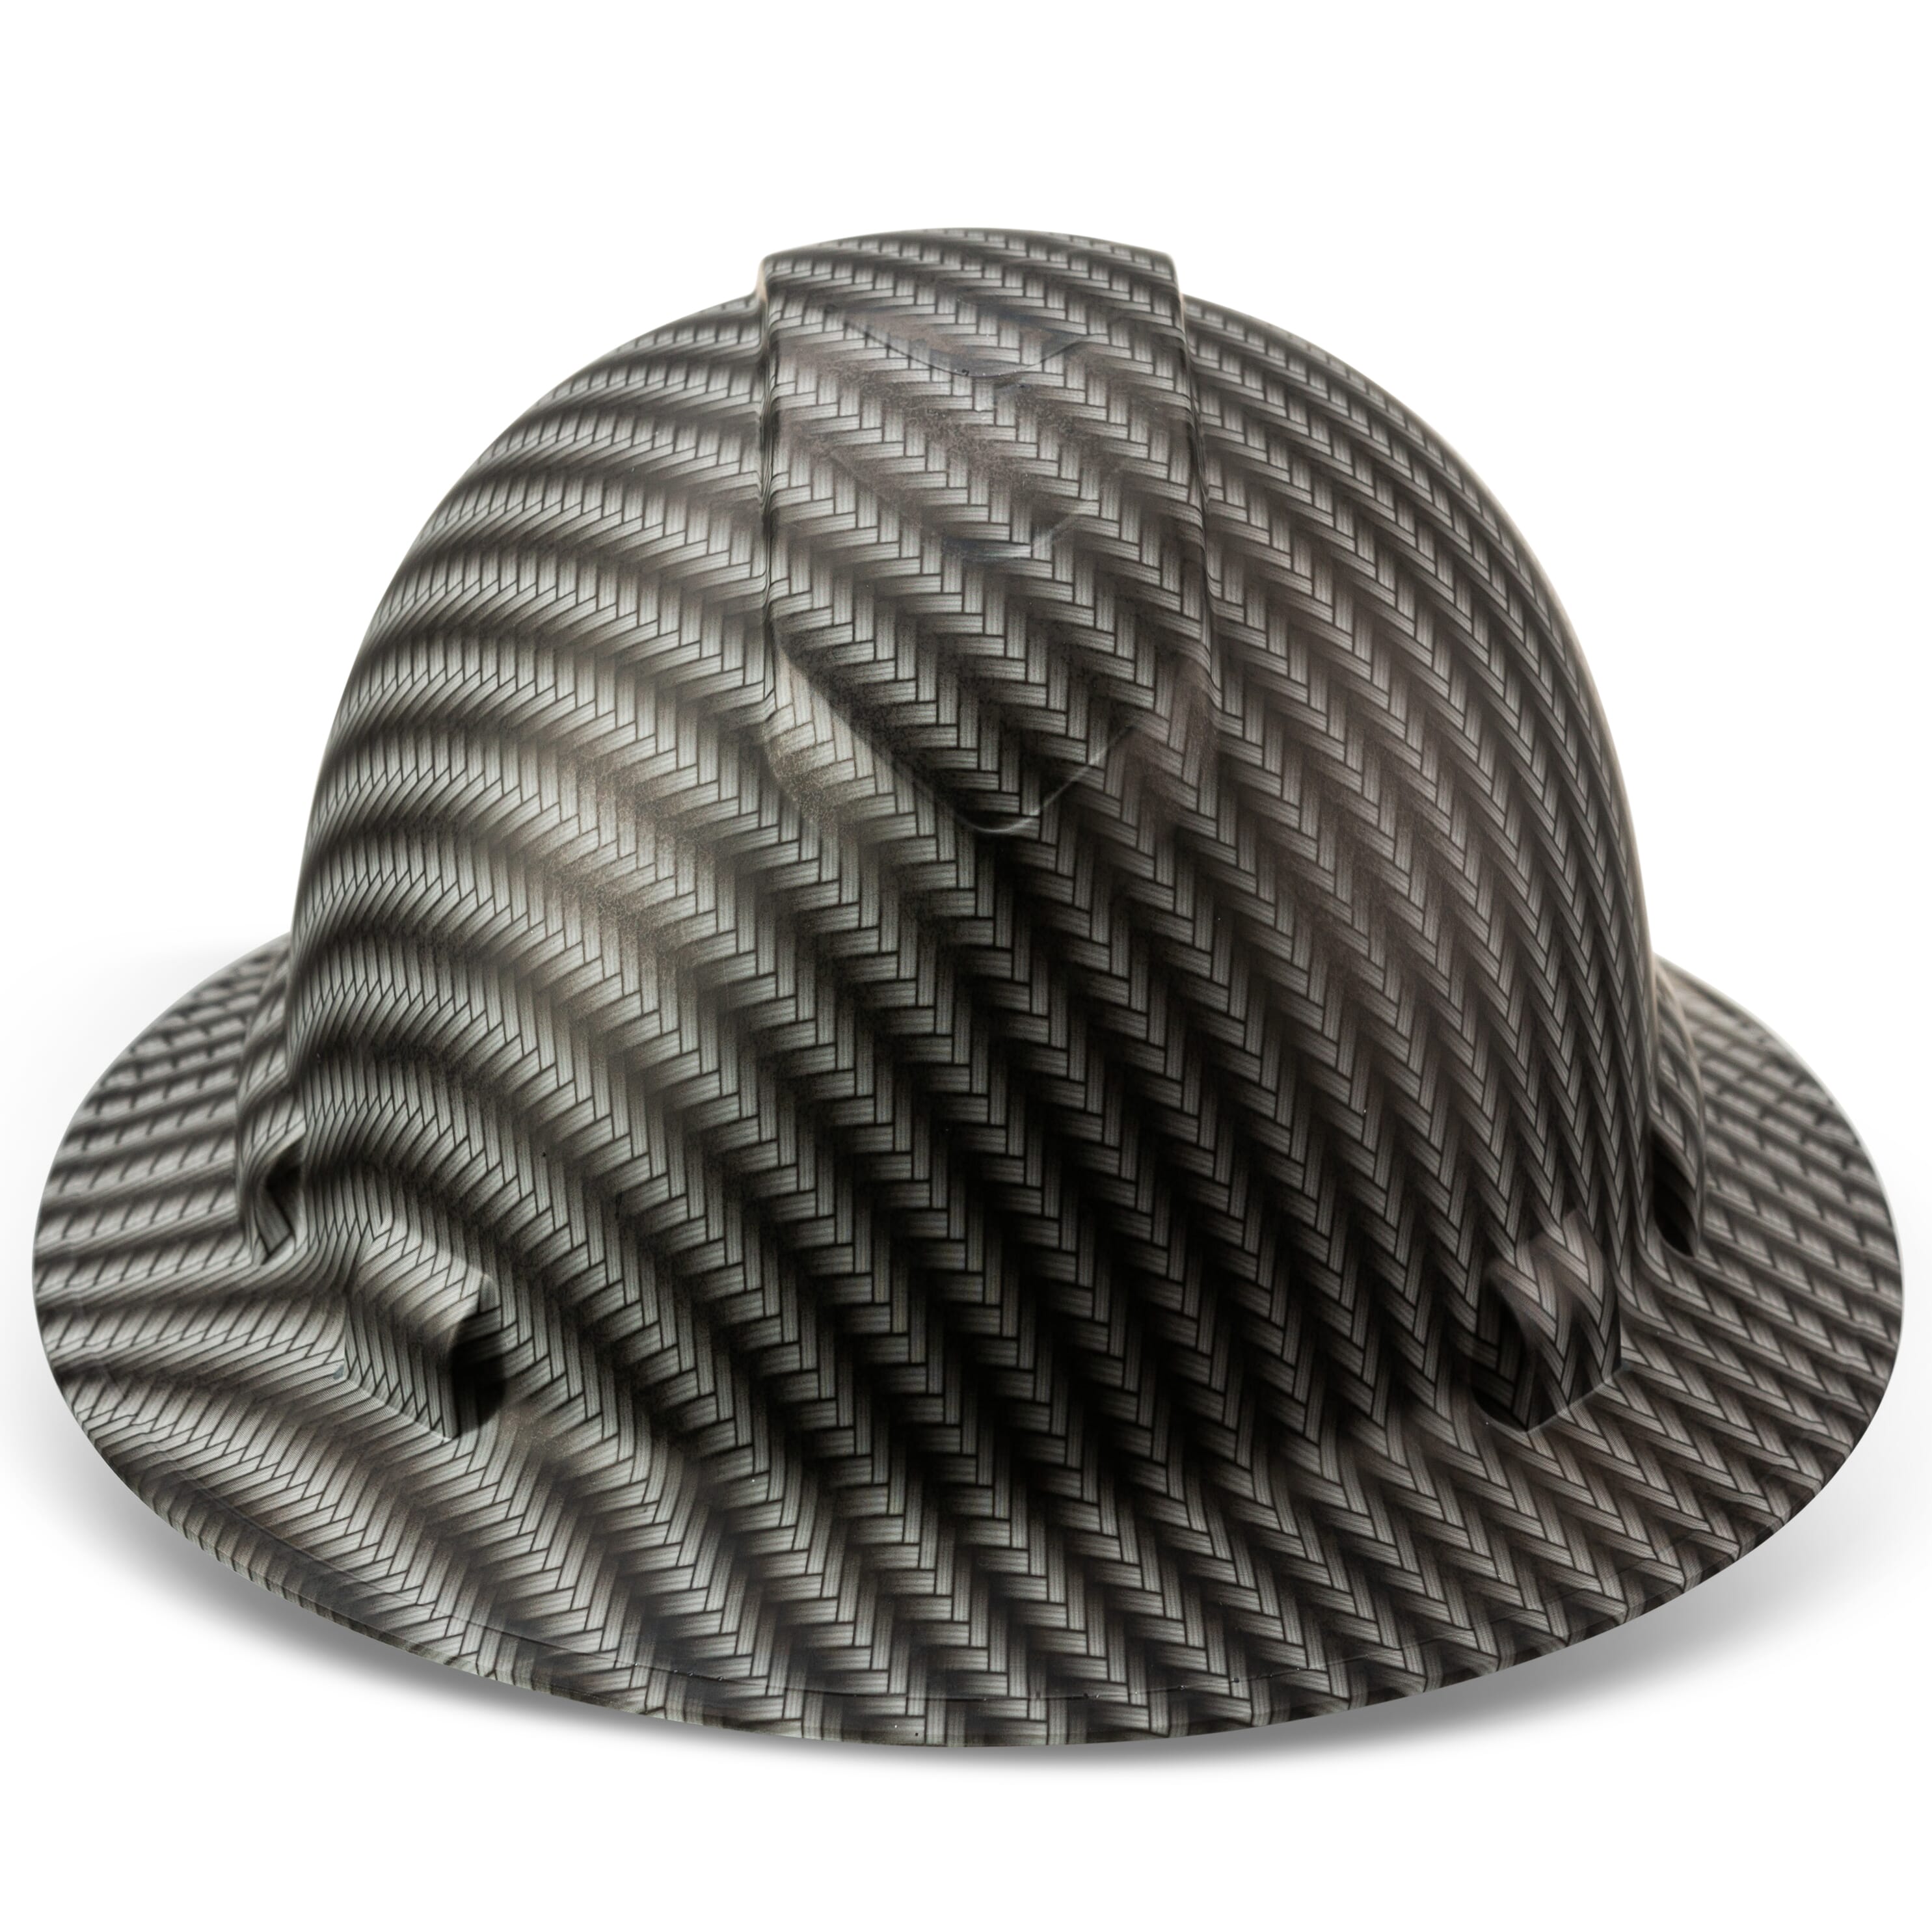 Full Brim Pyramex Hard Hat, Custom Tire Track Design, Safety Helmet, 6 Point